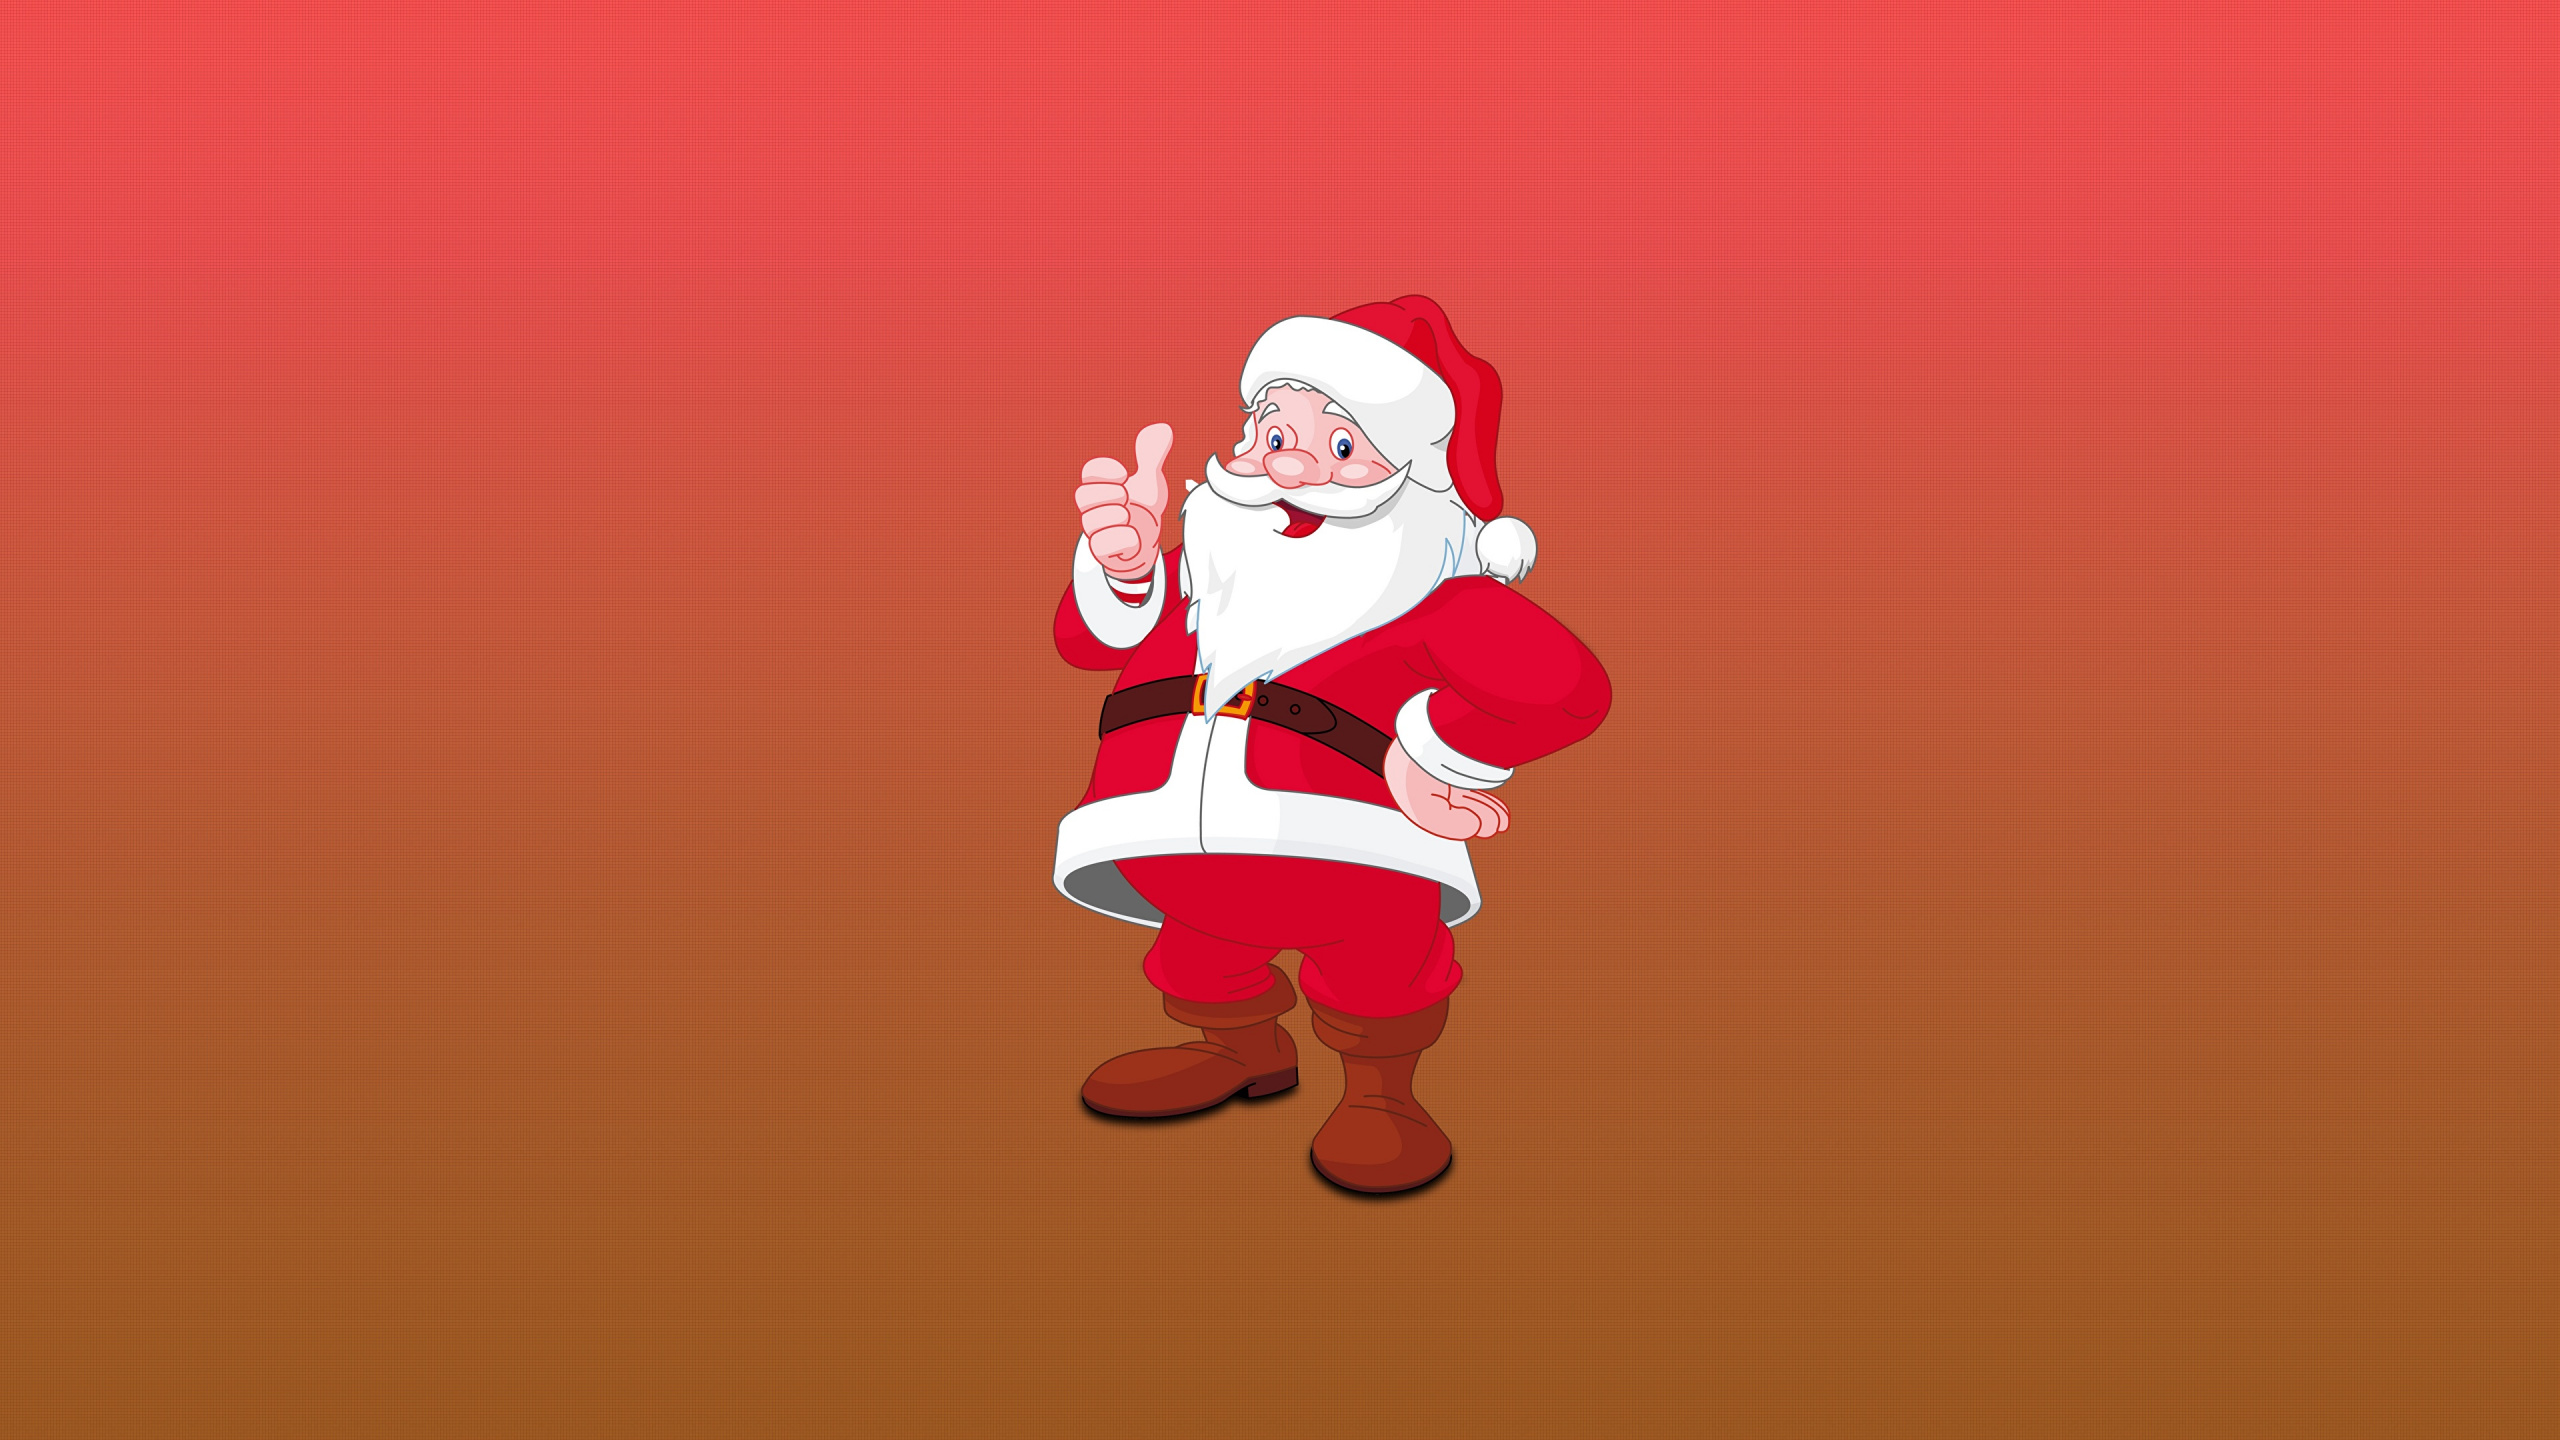 Santa Claus, Illustration, Ded Moroz, Le Jour De Noël, Red. Wallpaper in 2560x1440 Resolution